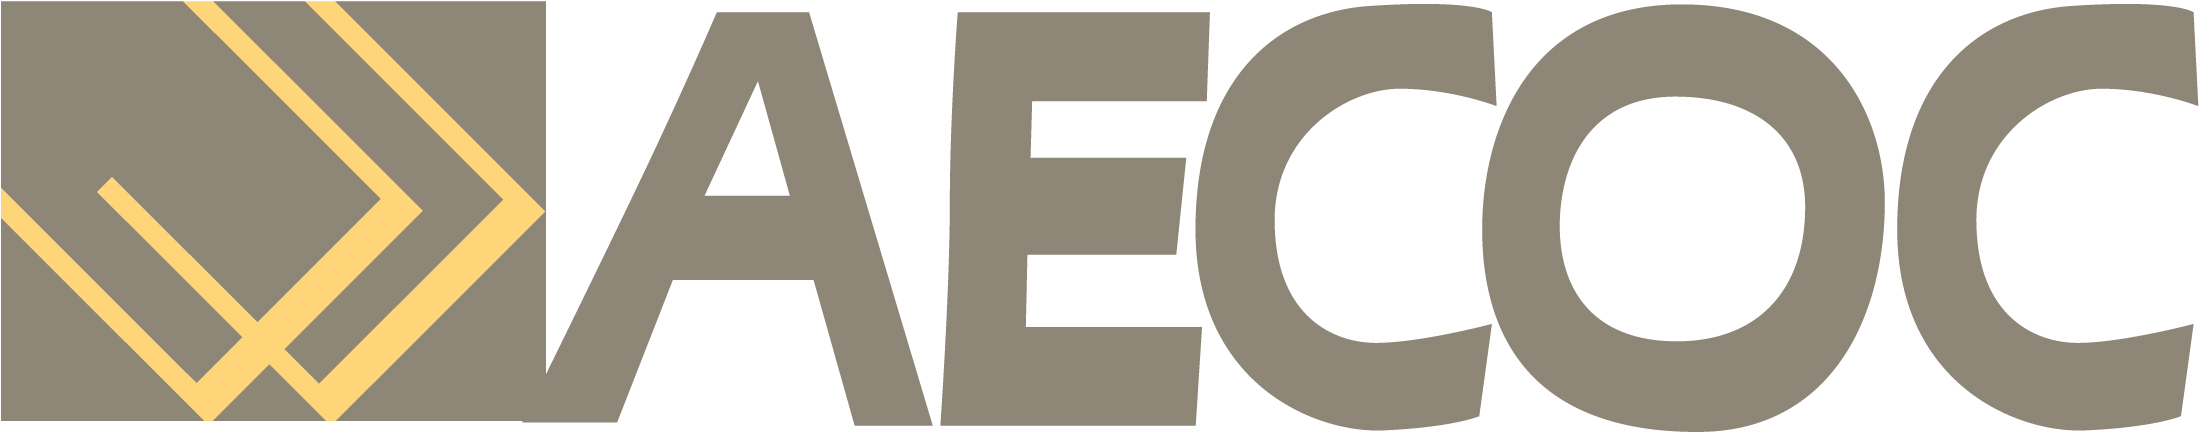 AECOC_logo